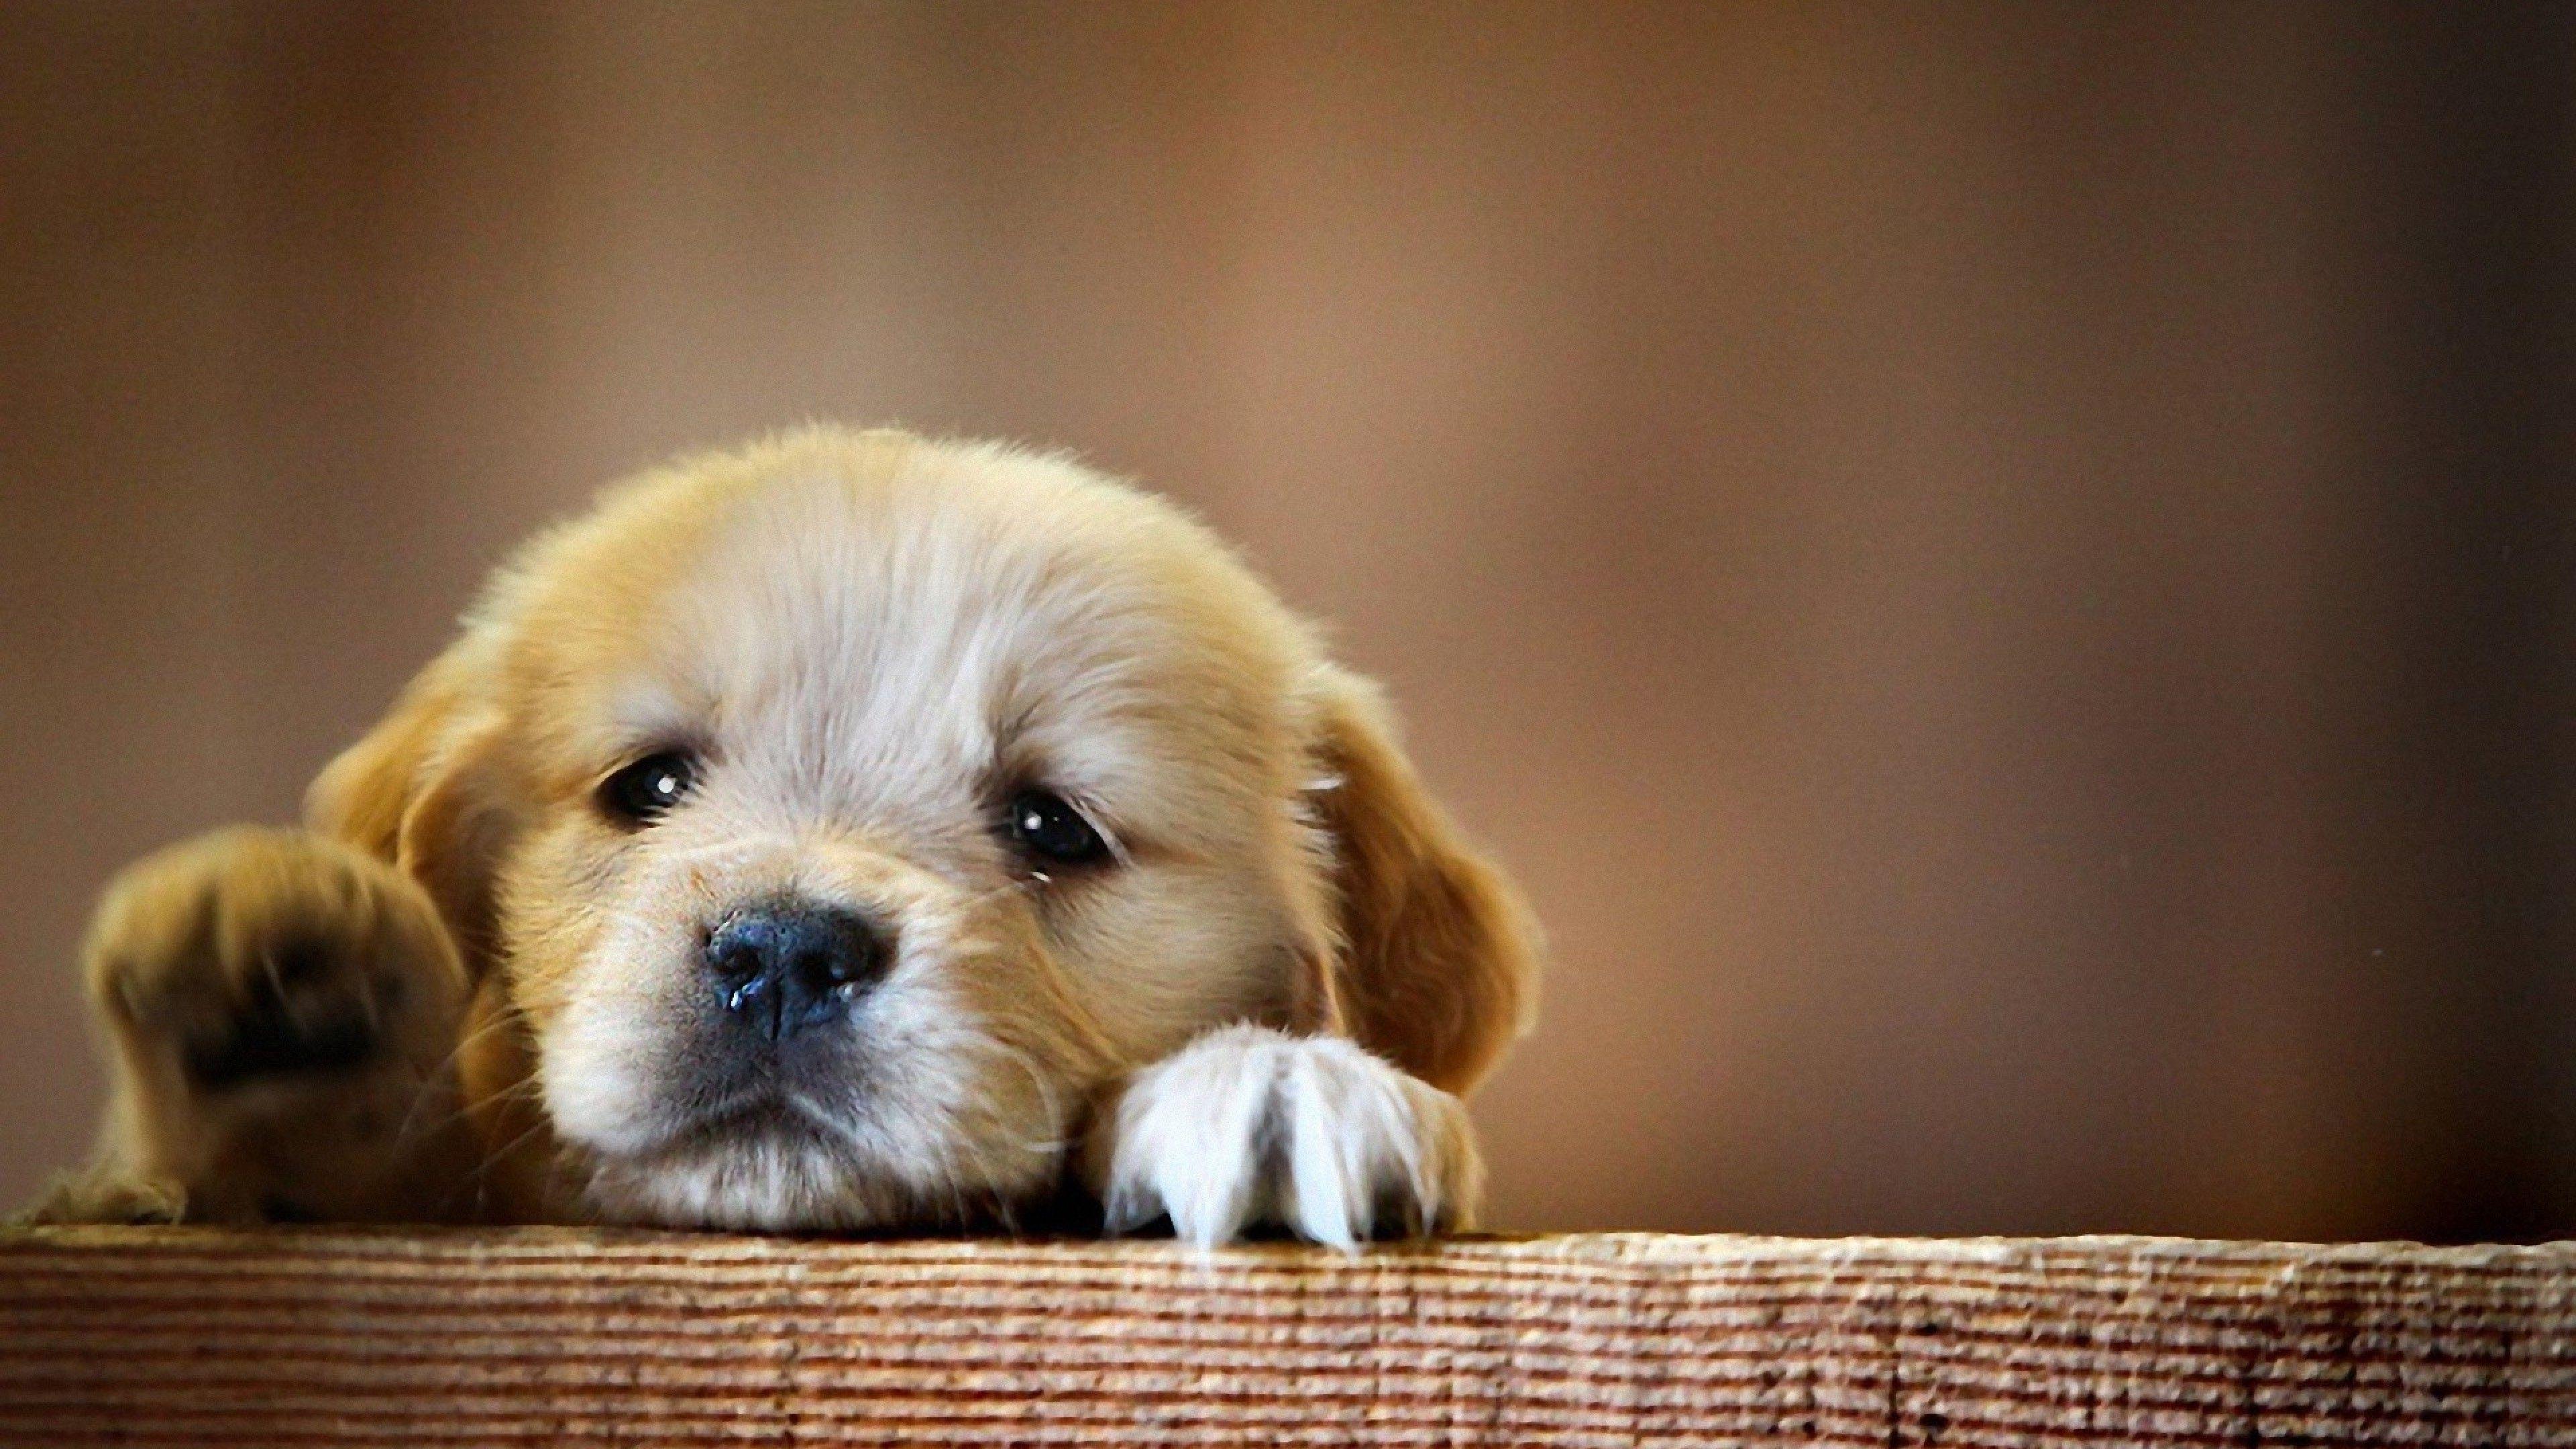 Puppy Snout Dog, HD Animals, 4k Wallpaper, Image, Background